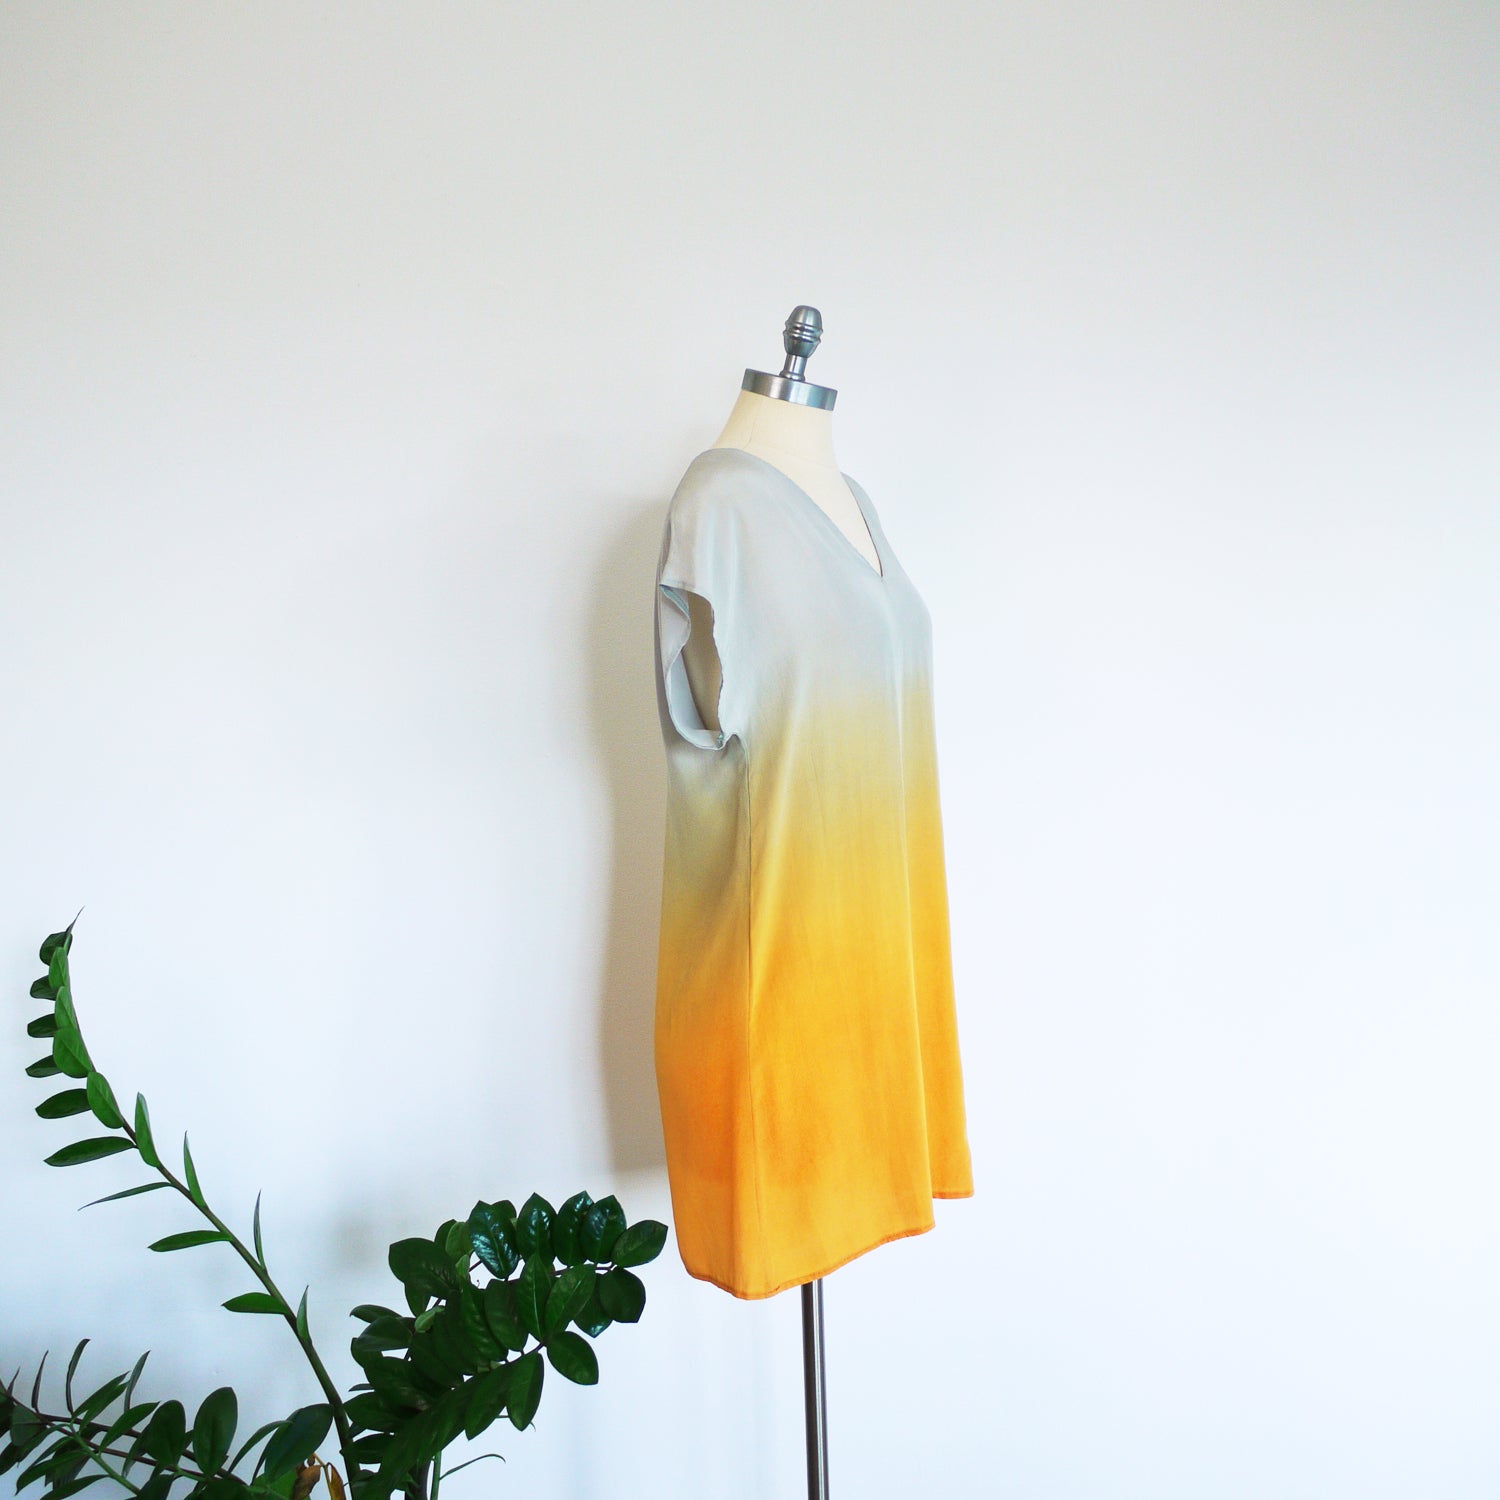 SUNRISE V-neck Ombre Silk Dress, Medium